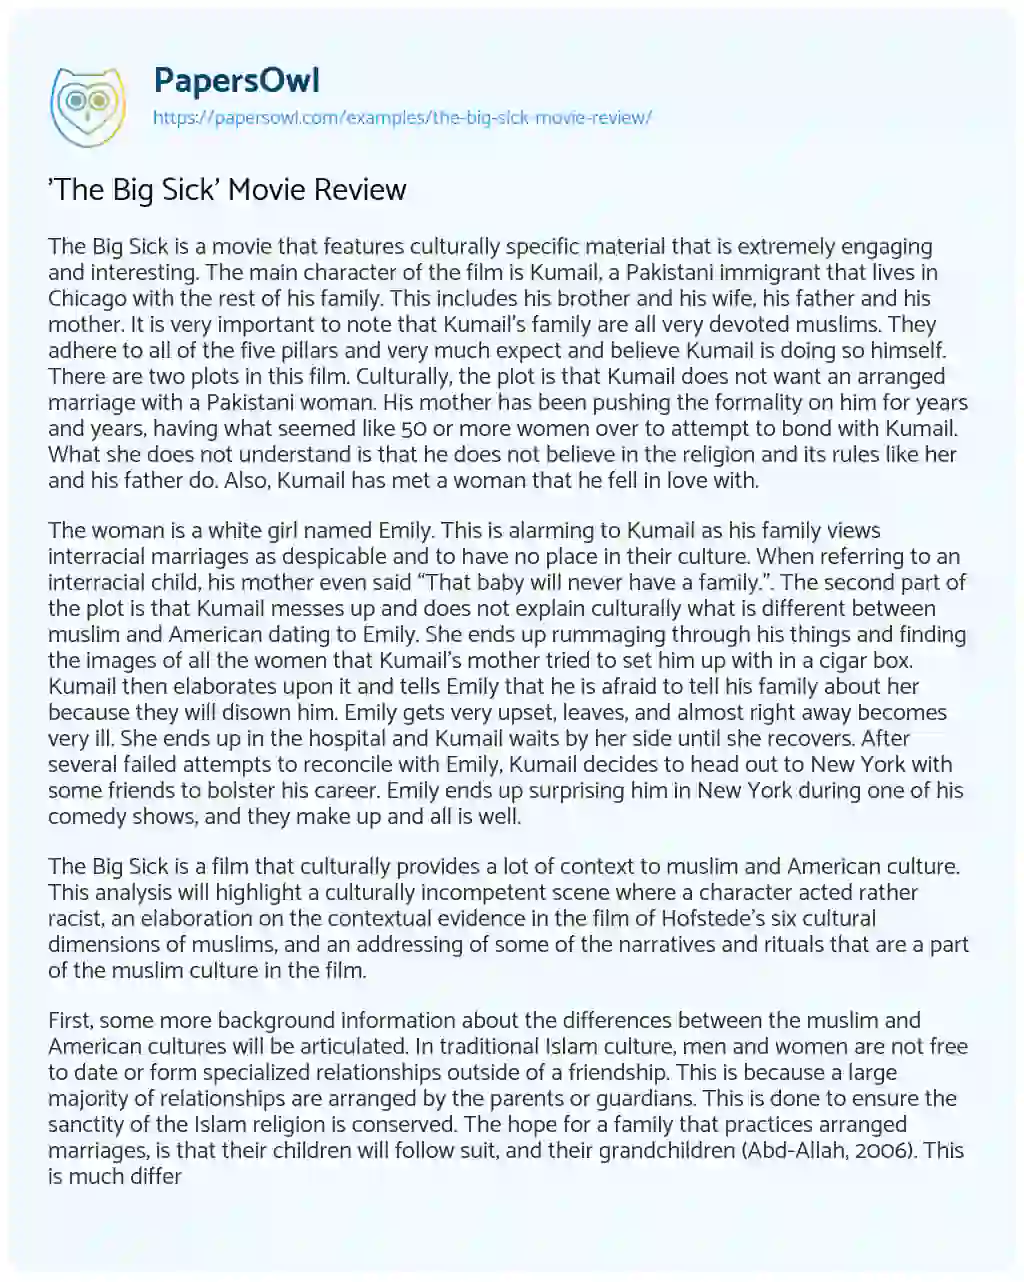 ‘The Big Sick’ Movie Review essay